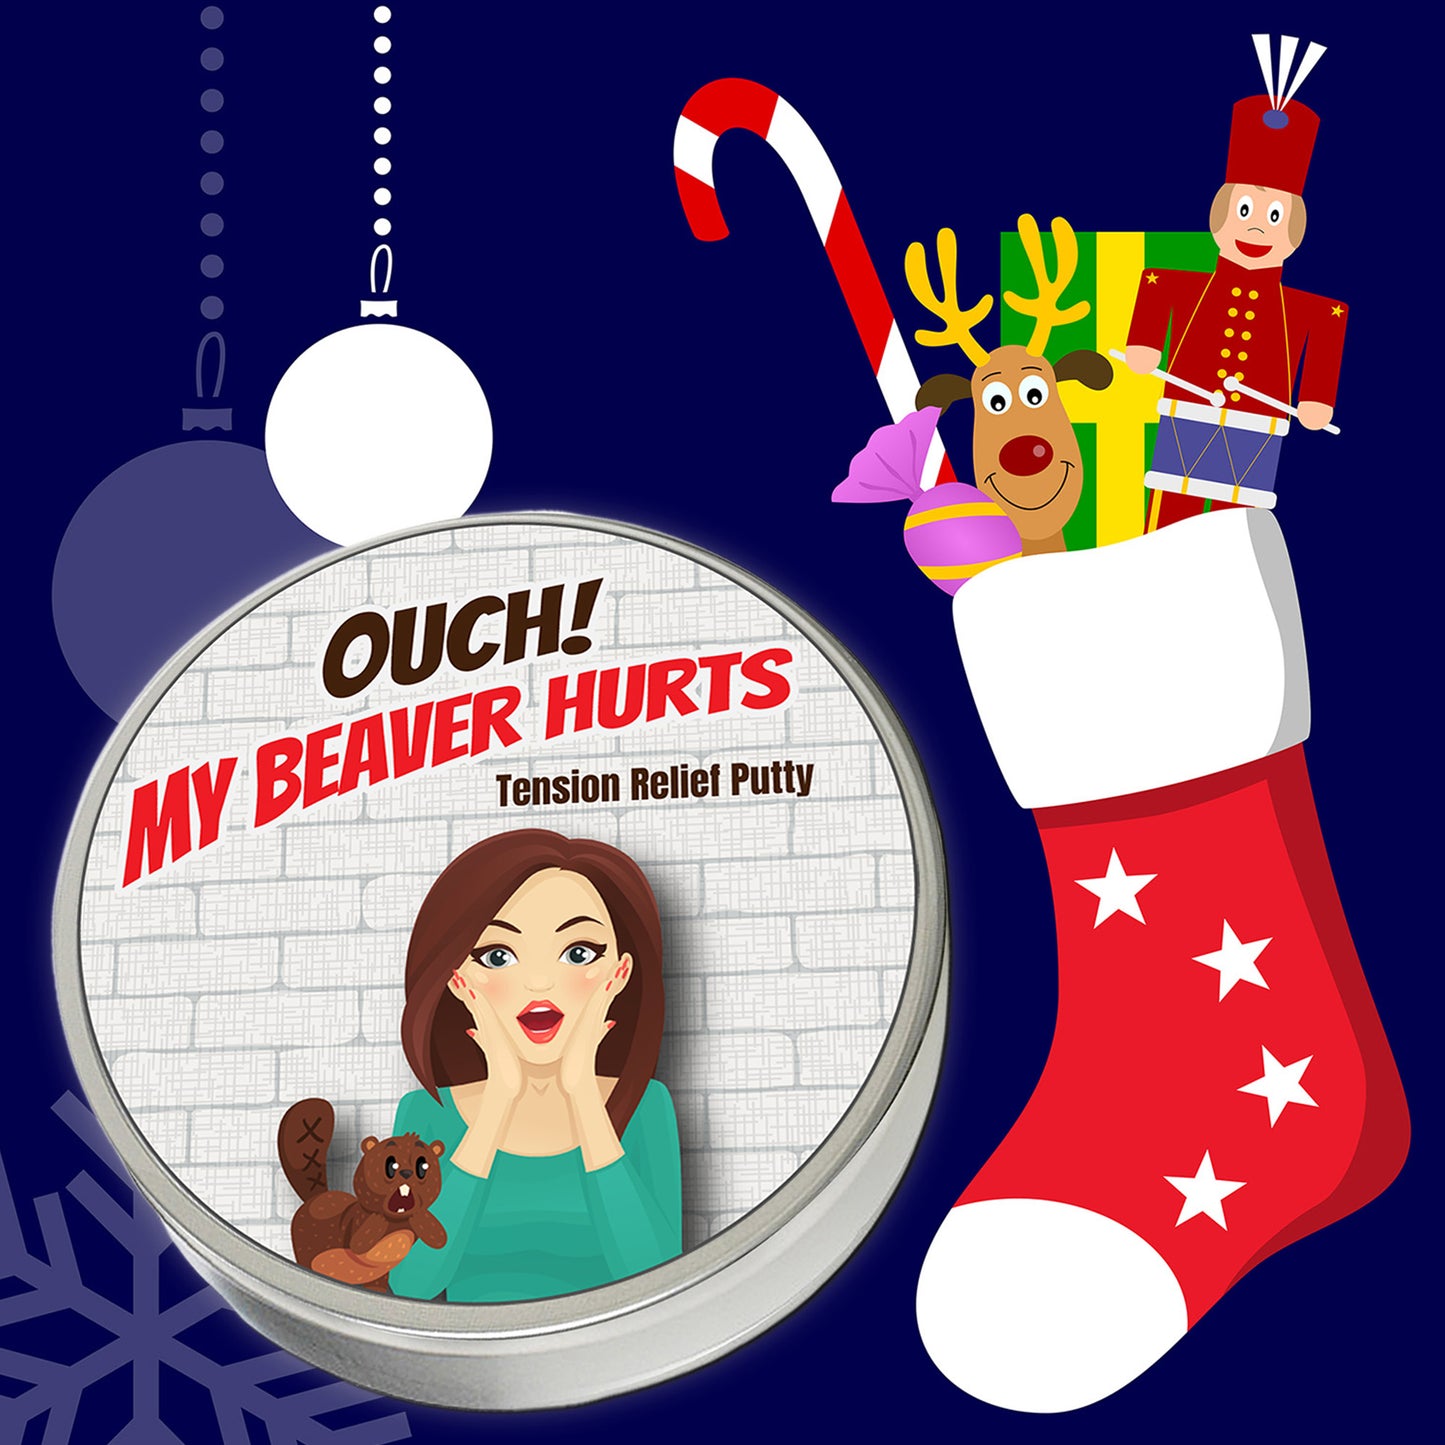 My Beaver Hurts Stress Putty